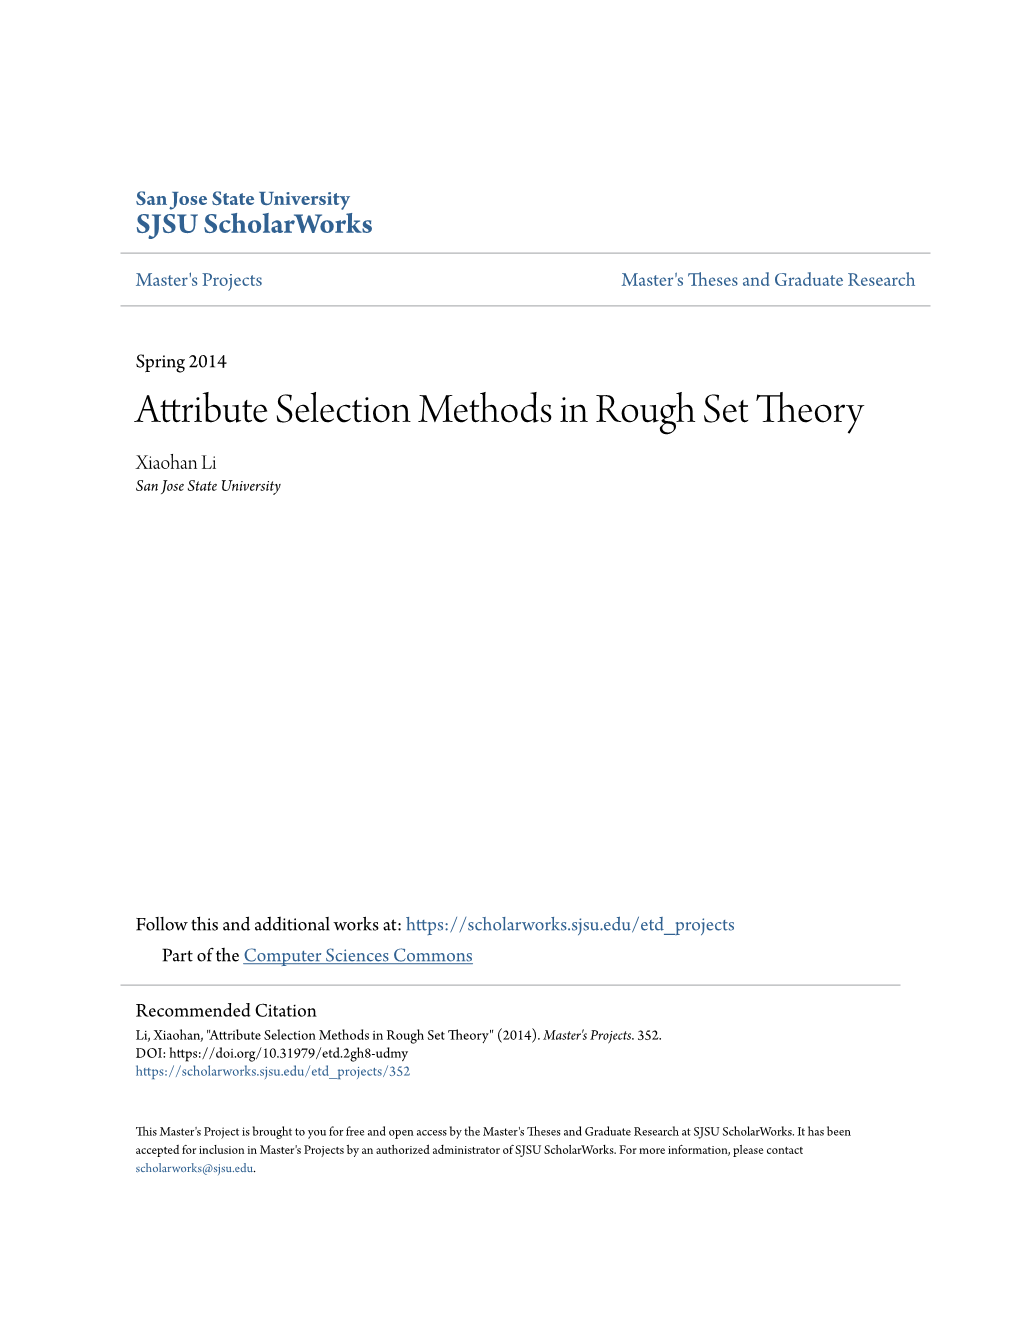 Attribute Selection Methods in Rough Set Theory Xiaohan Li San Jose State University